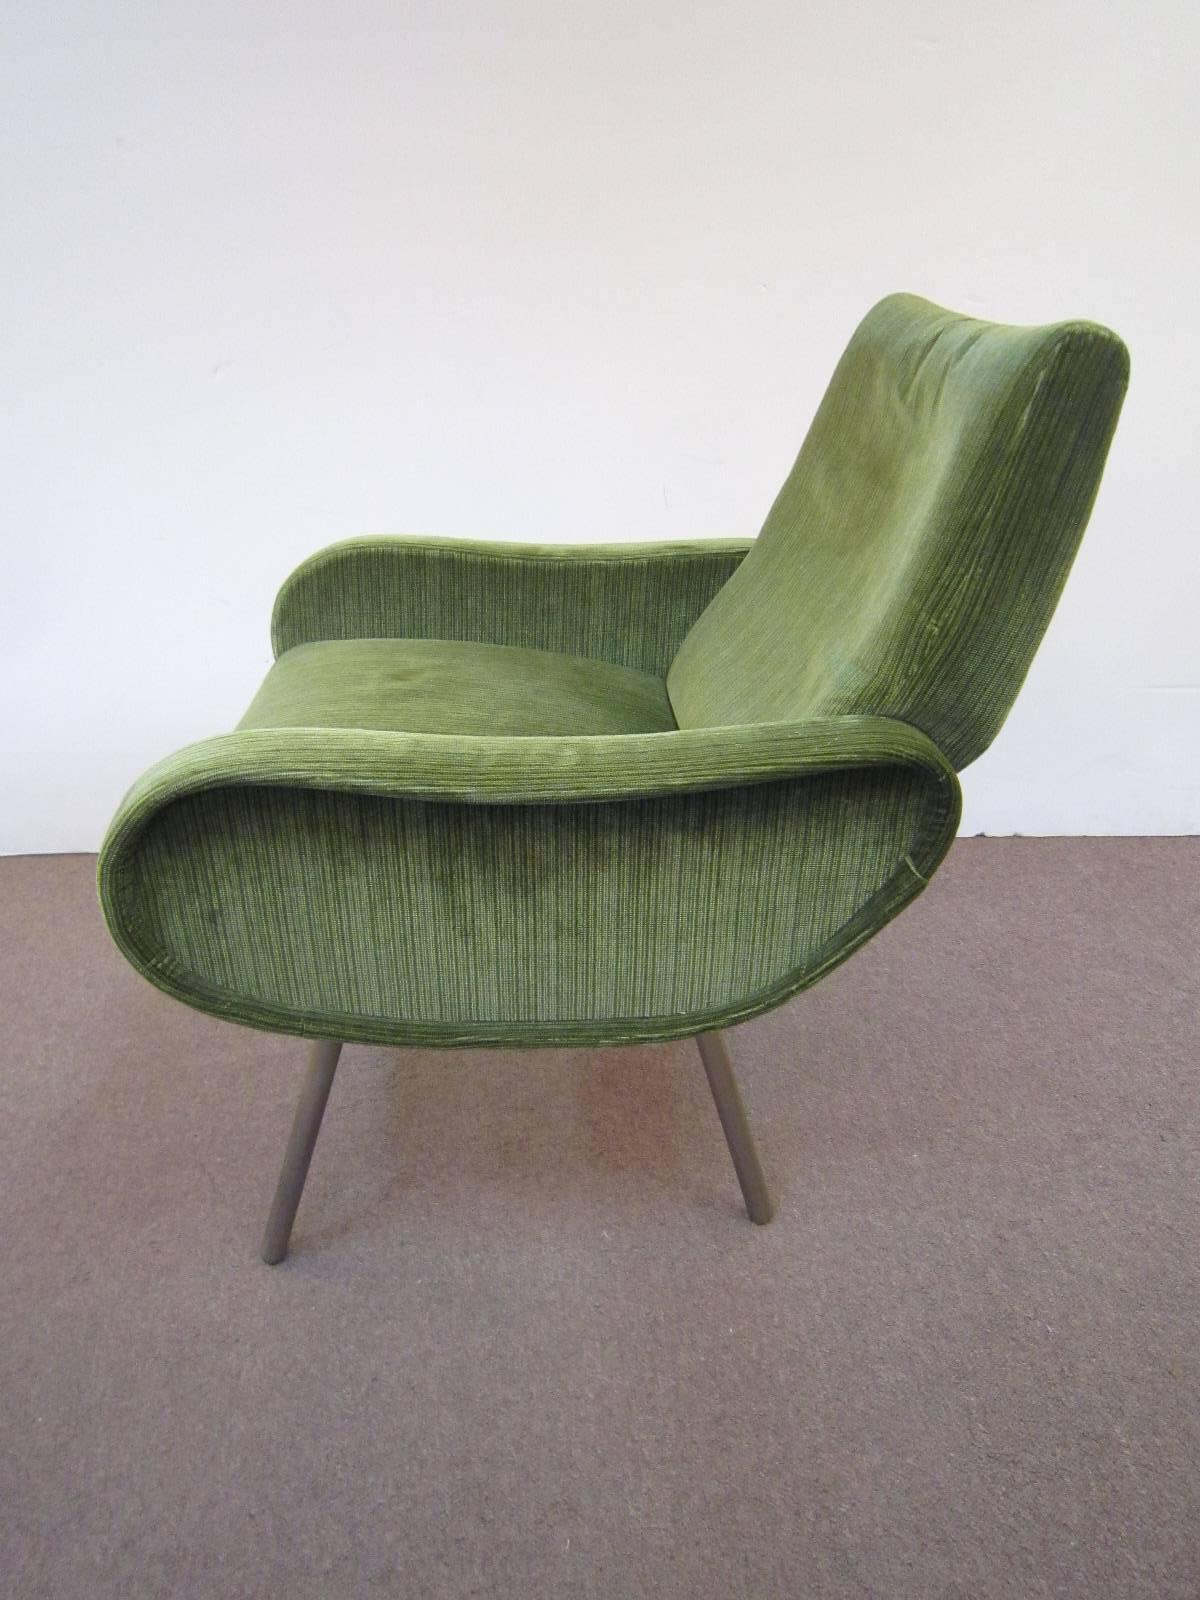 A set of three Italian Modern petite chairs designed by Marco Zanuso for Artflex.
